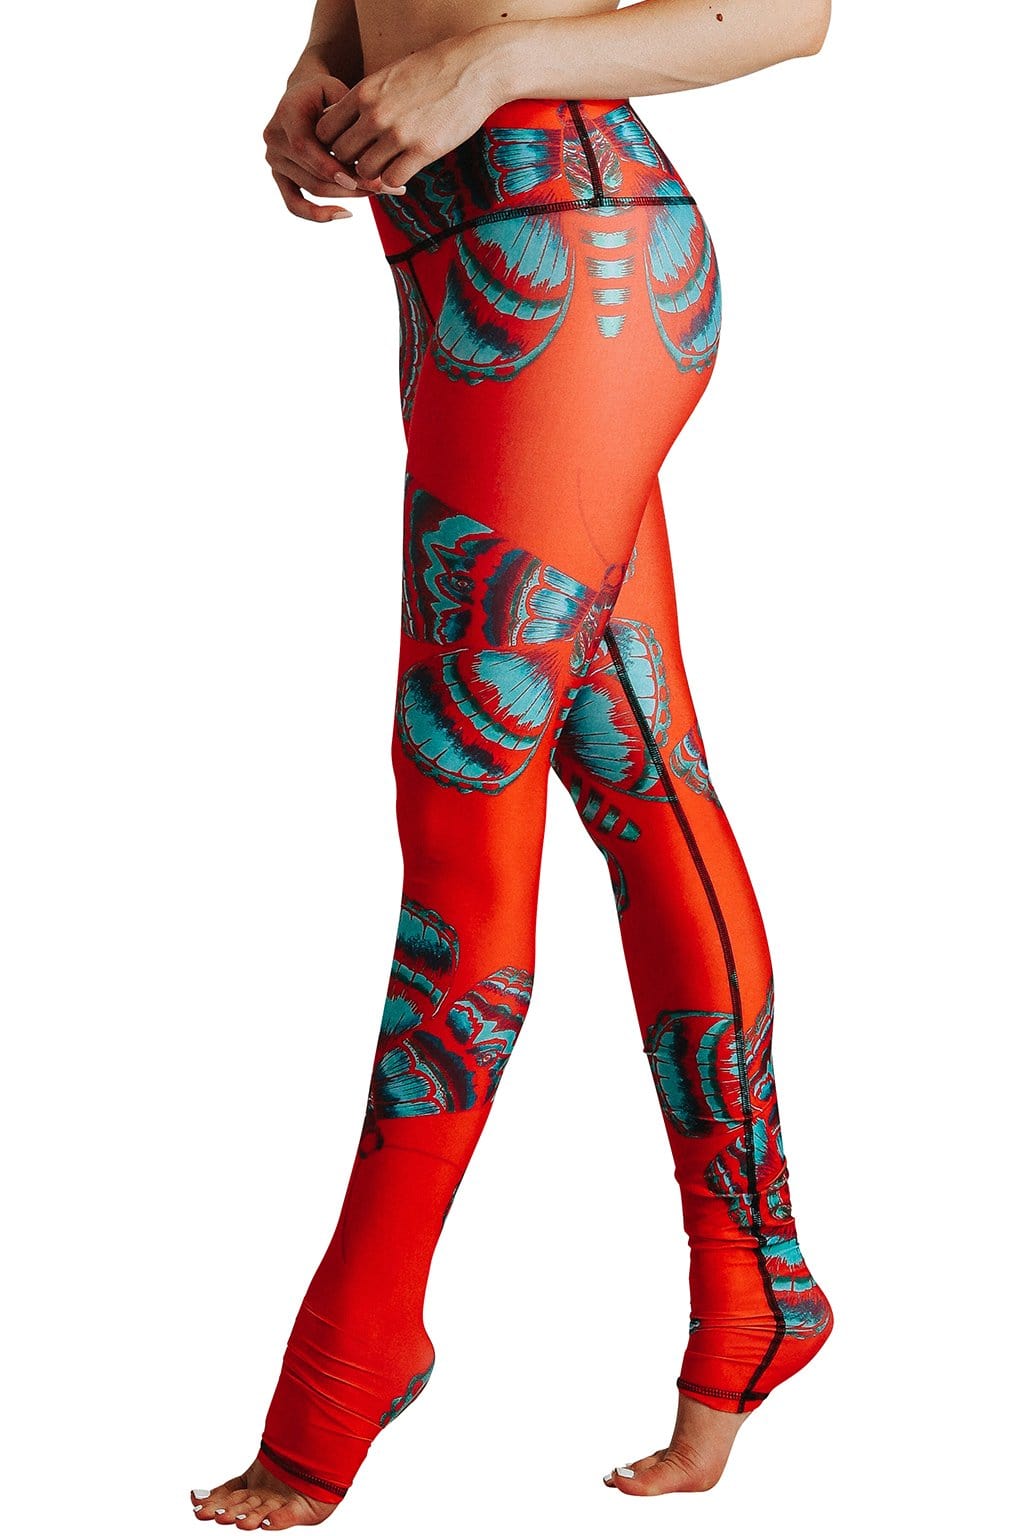 CRZ YOGA Women's High Waist Yoga Pants Tiger print